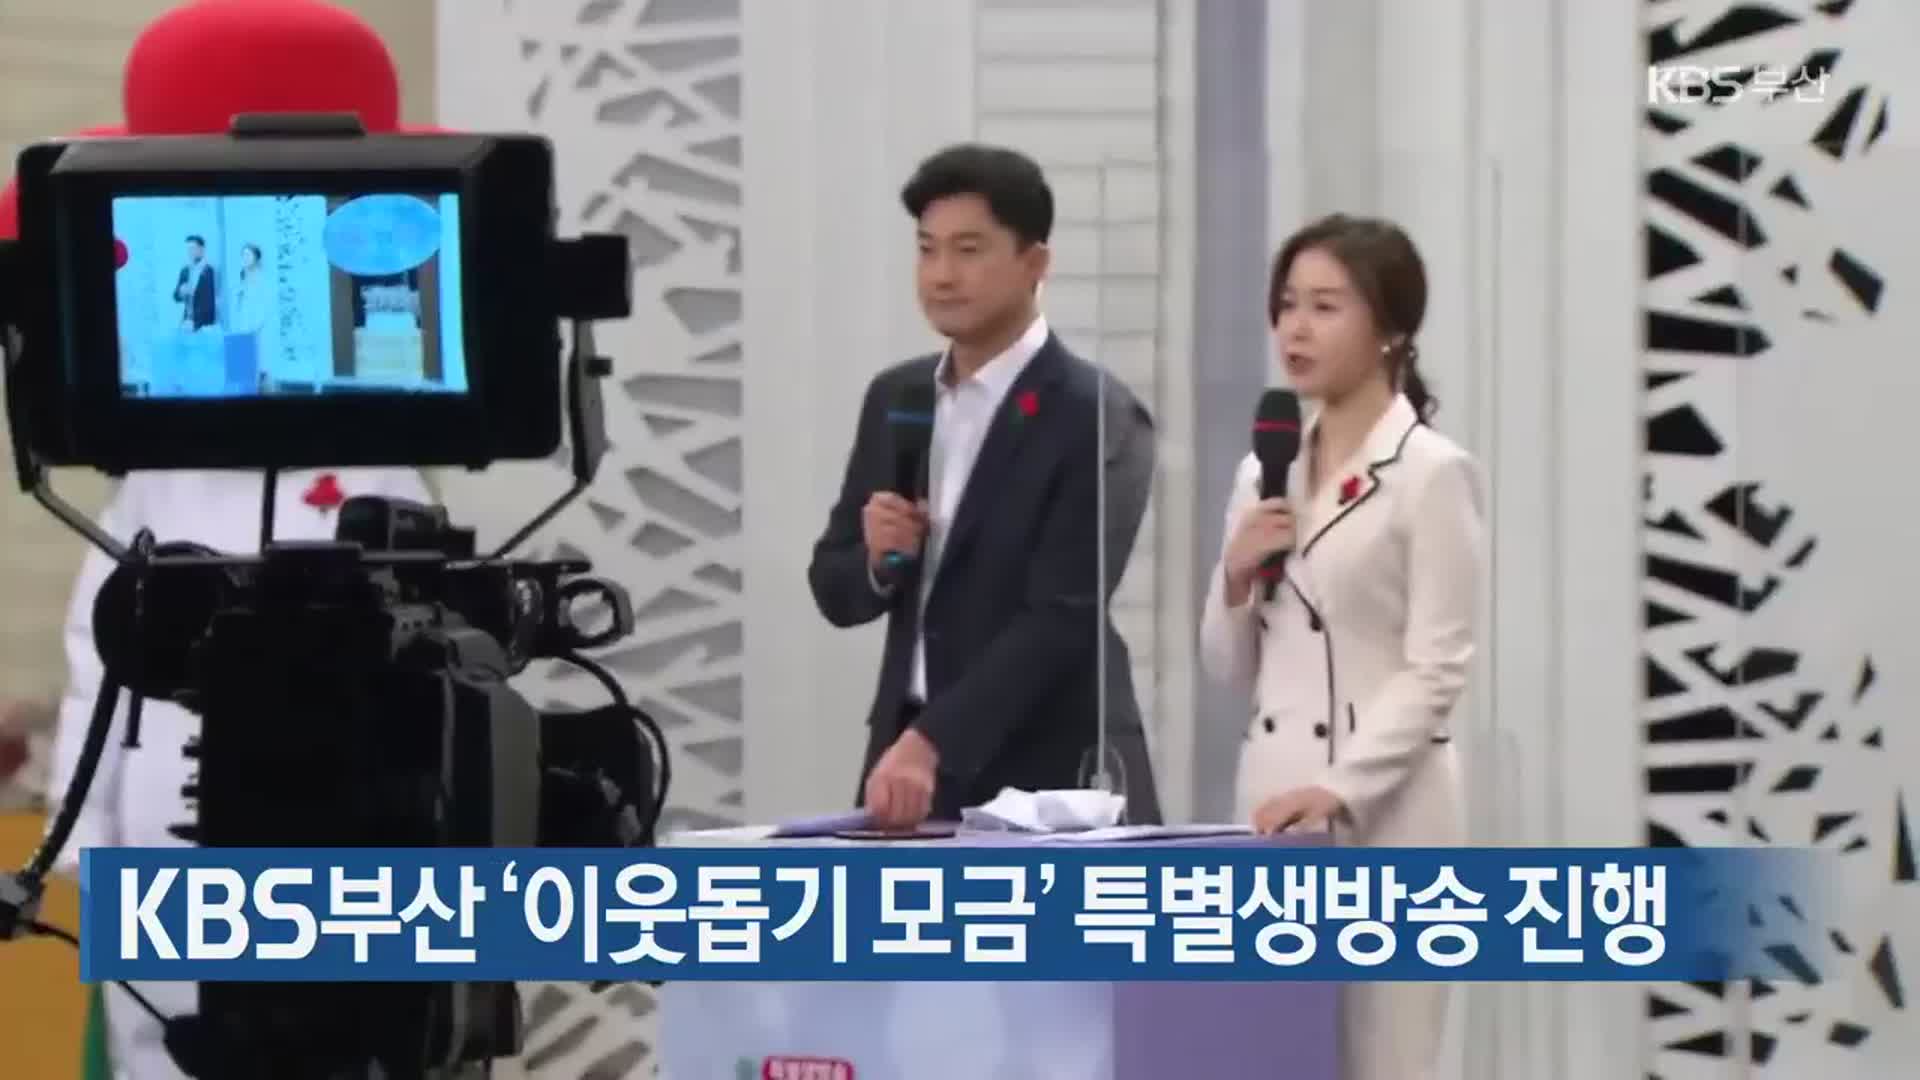 KBS부산 ‘이웃돕기 모금’ 특별생방송 진행